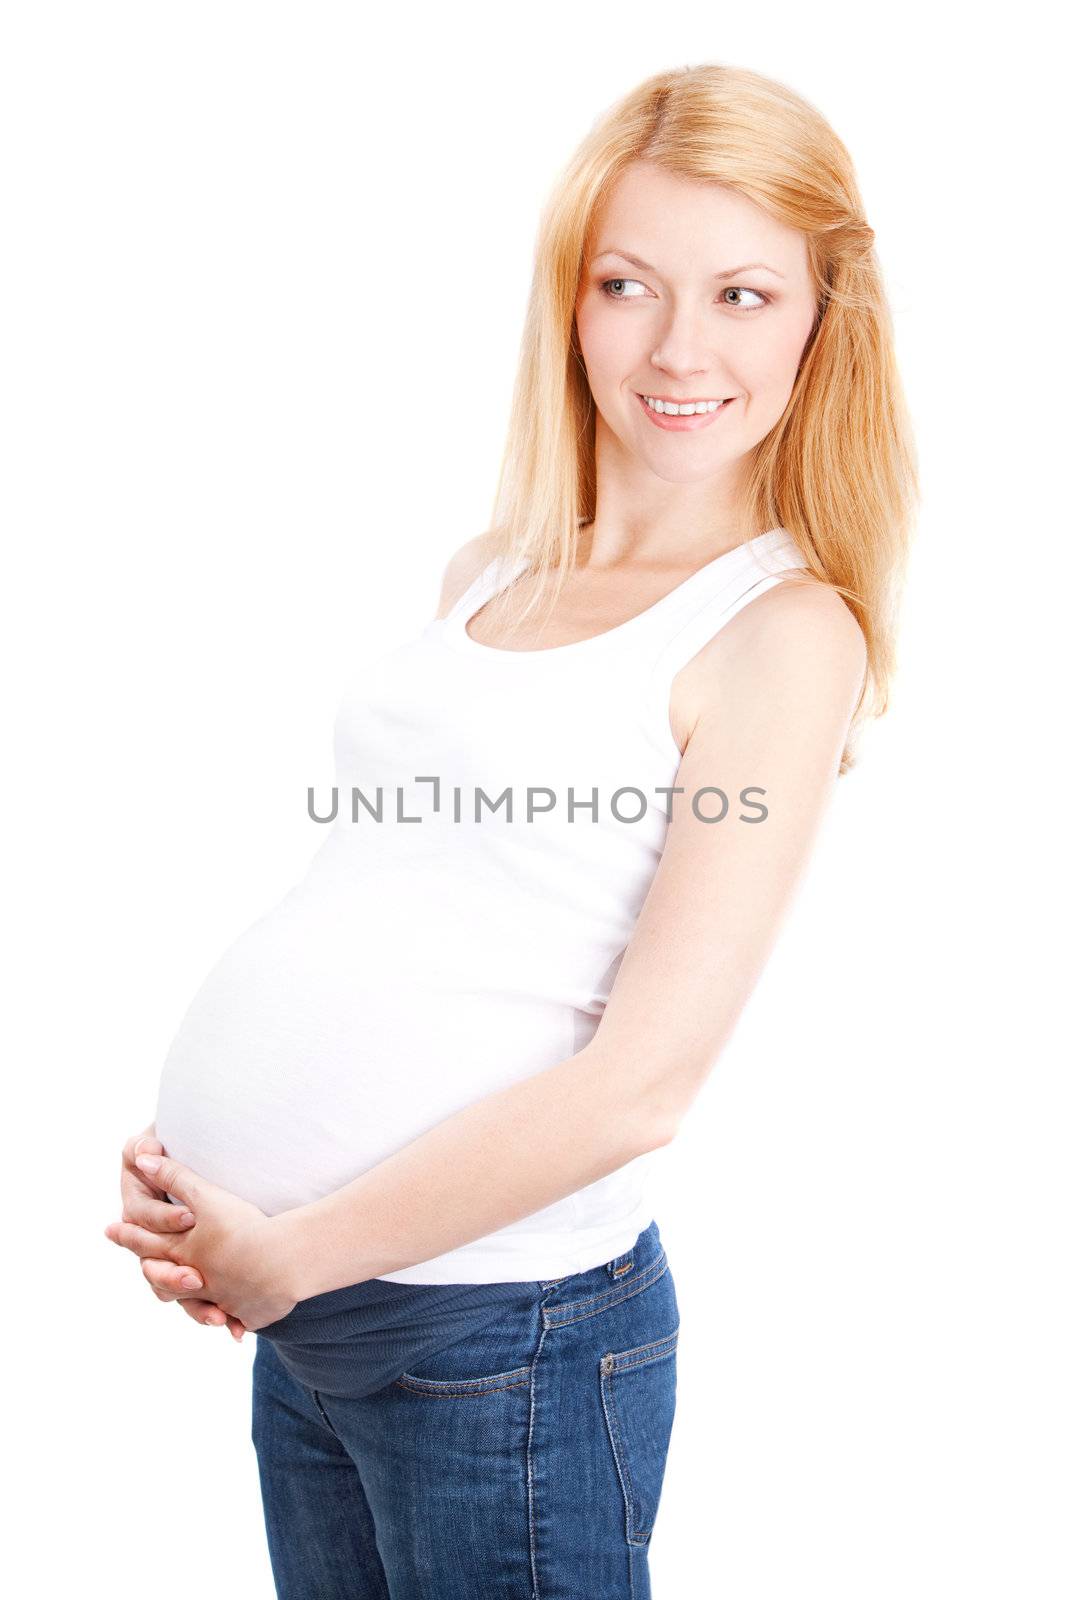 Pregnant woman by mihhailov